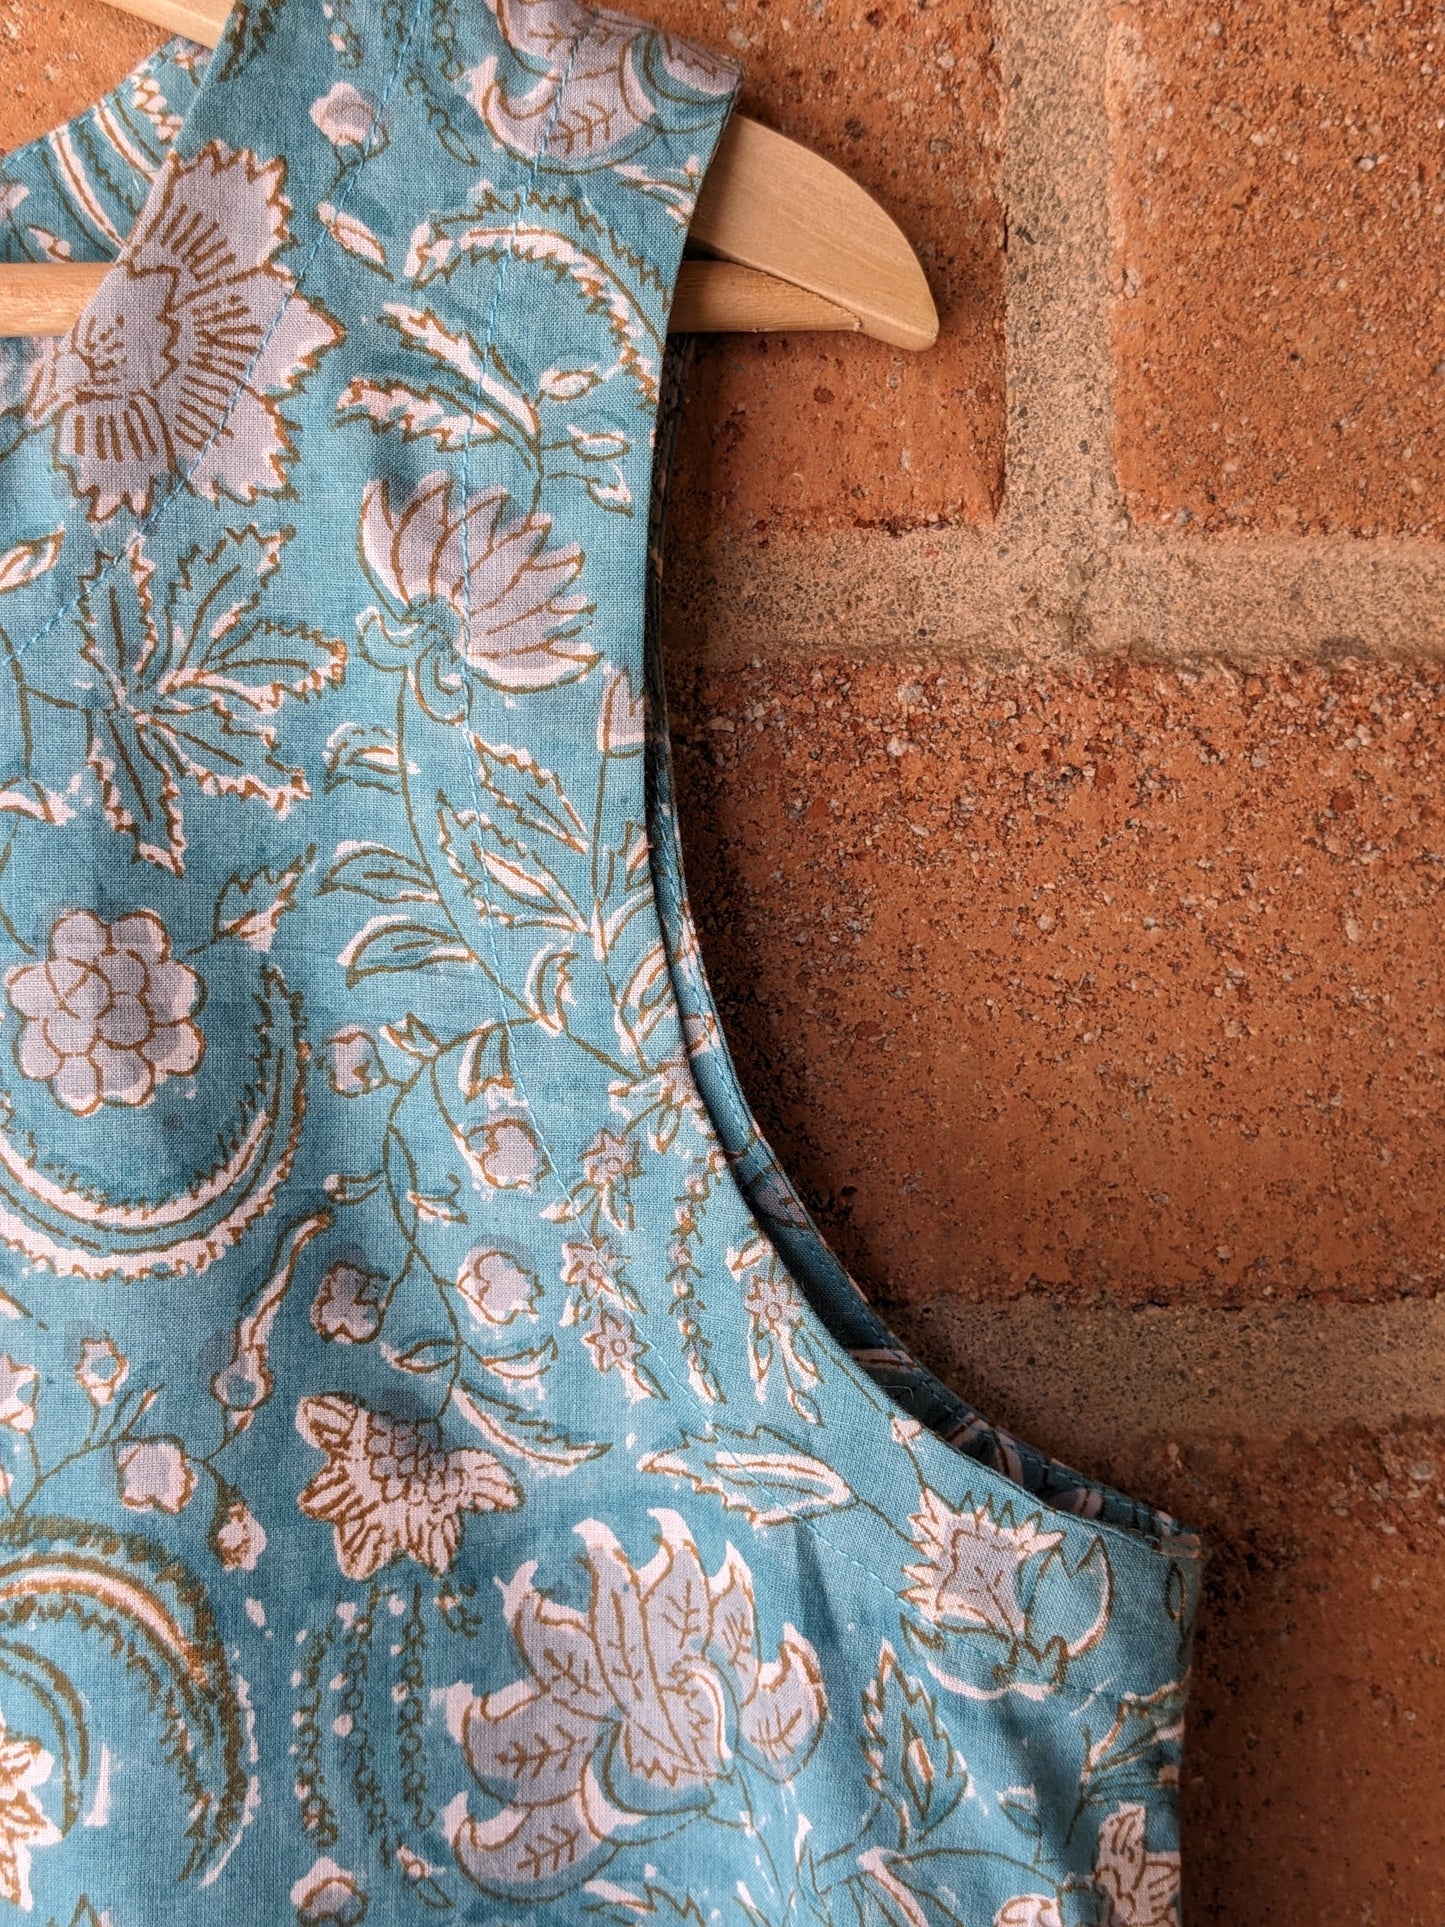 Women's Cotton Sleeveless Top - Block Print - Blue - Close up Image